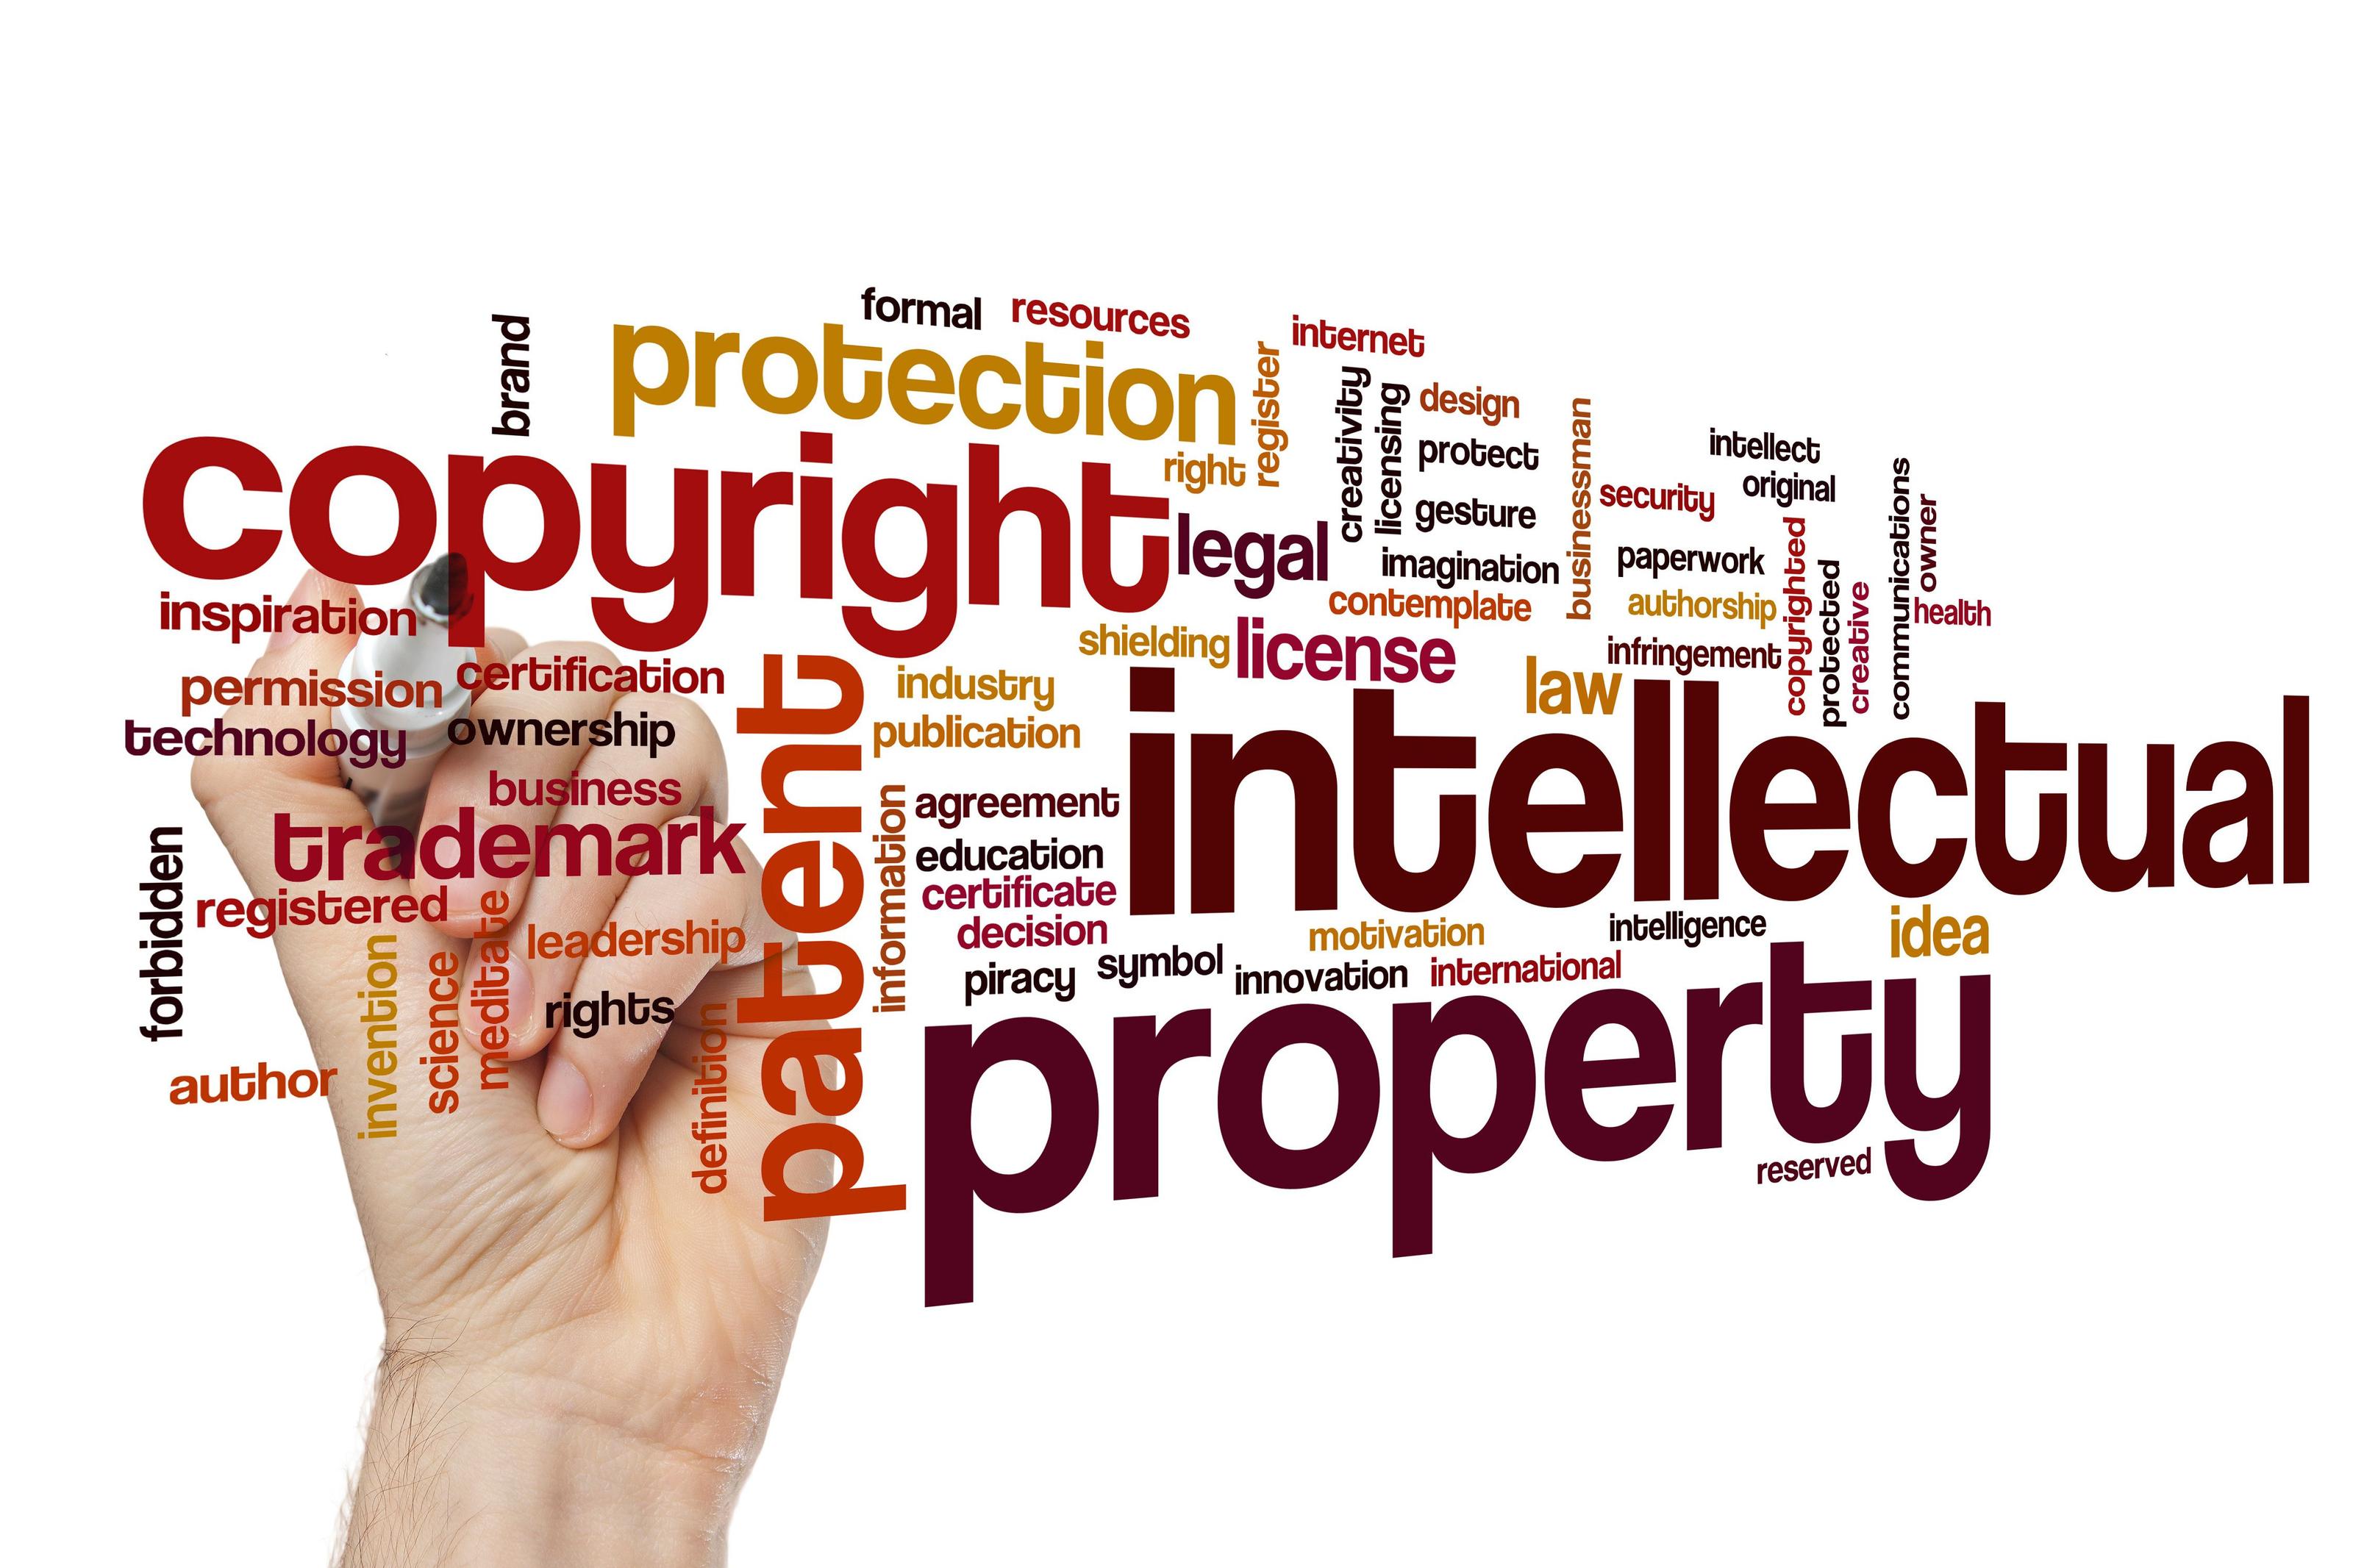 intellectual property law presentation